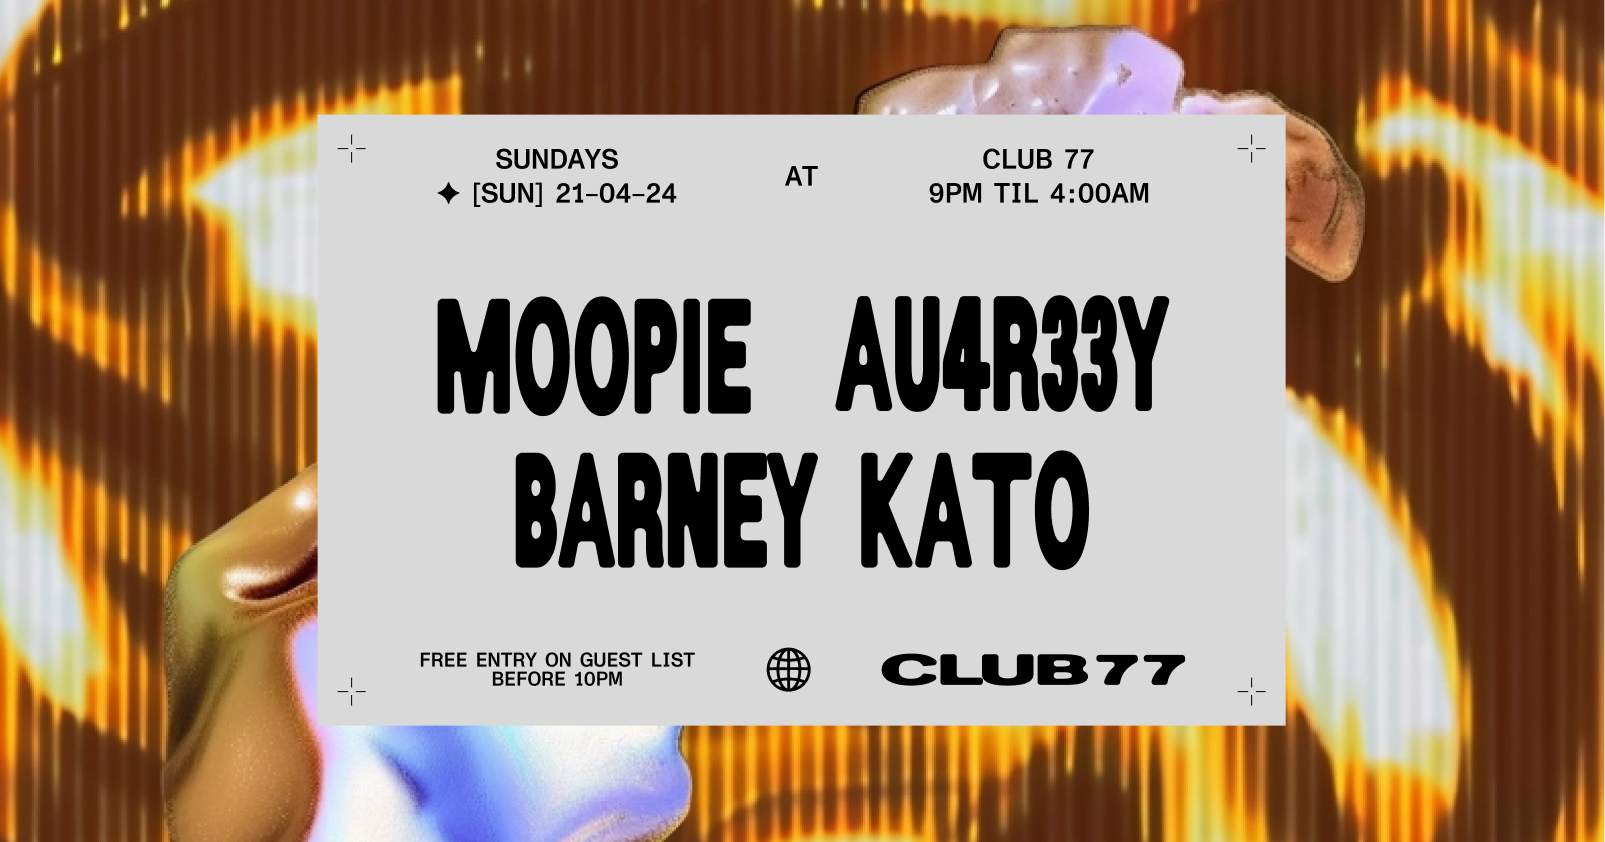 Sundays at 77: Moopie, au4r33y, Barney Kato - フライヤー表